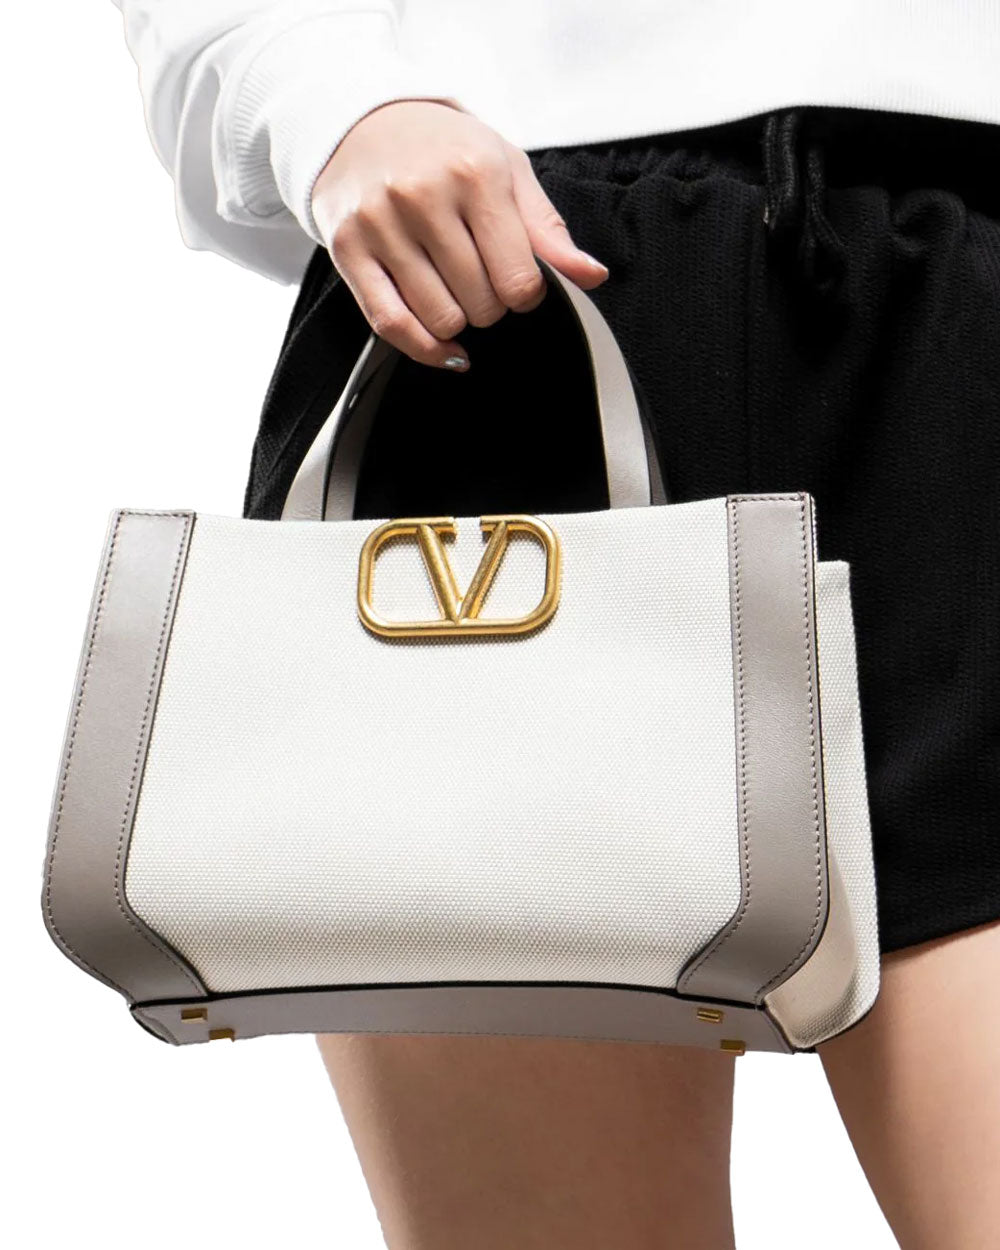 Women's Vlogo Signature small tote bag, VALENTINO GARAVANI